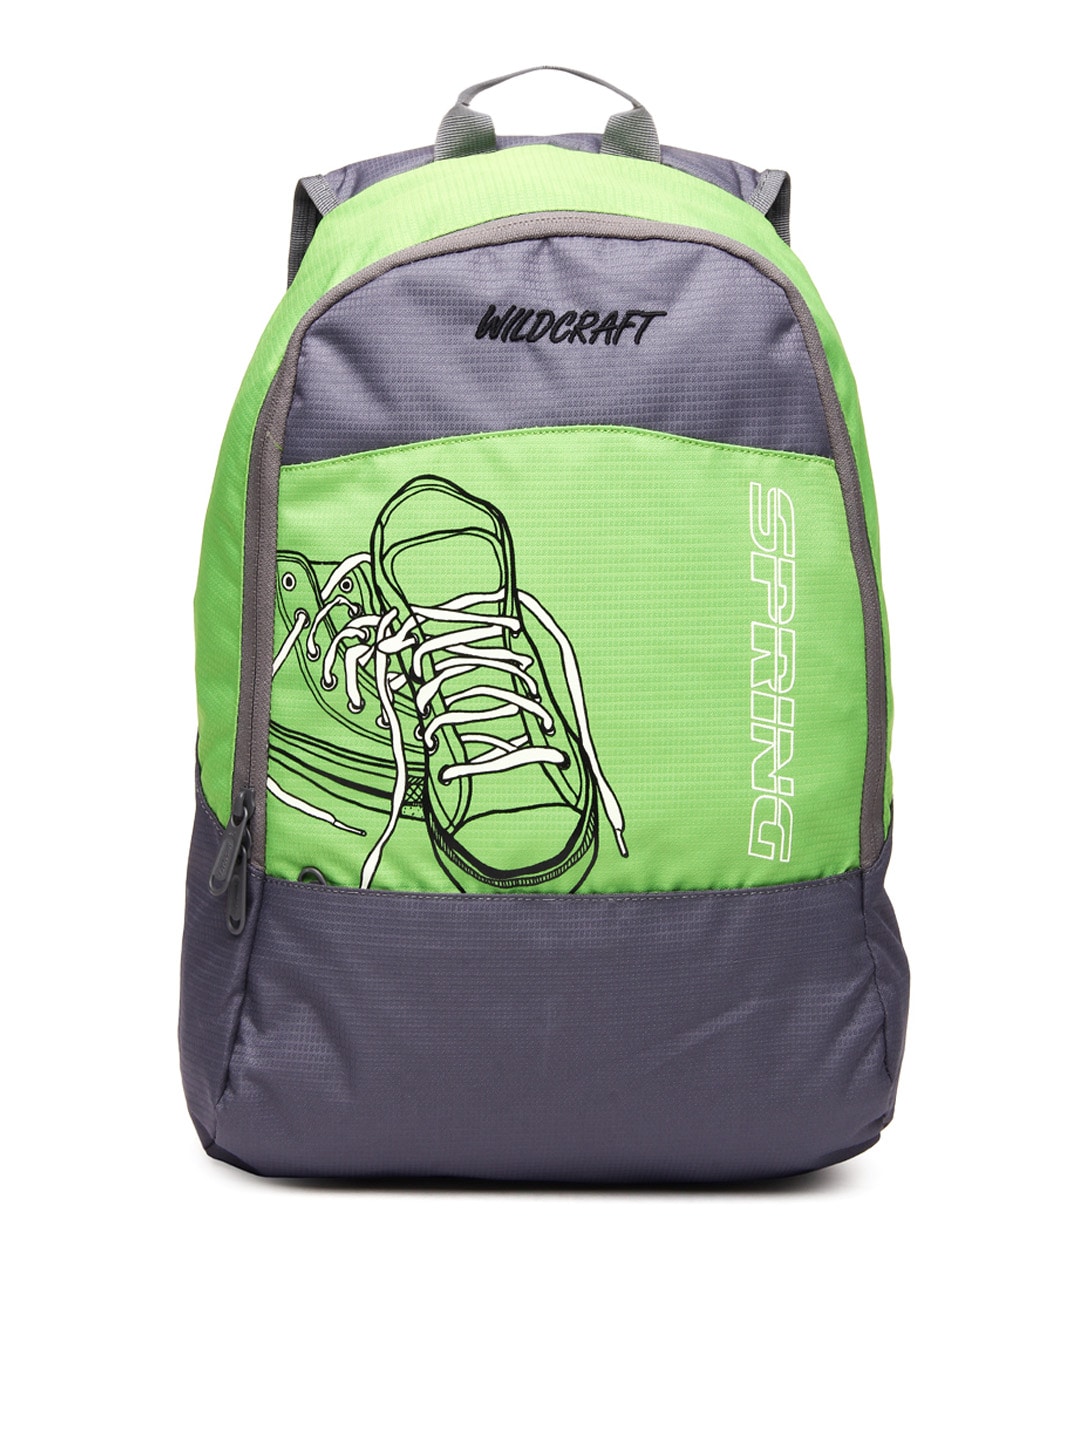 Wildcraft Unisex Green & Grey Printed Backpack